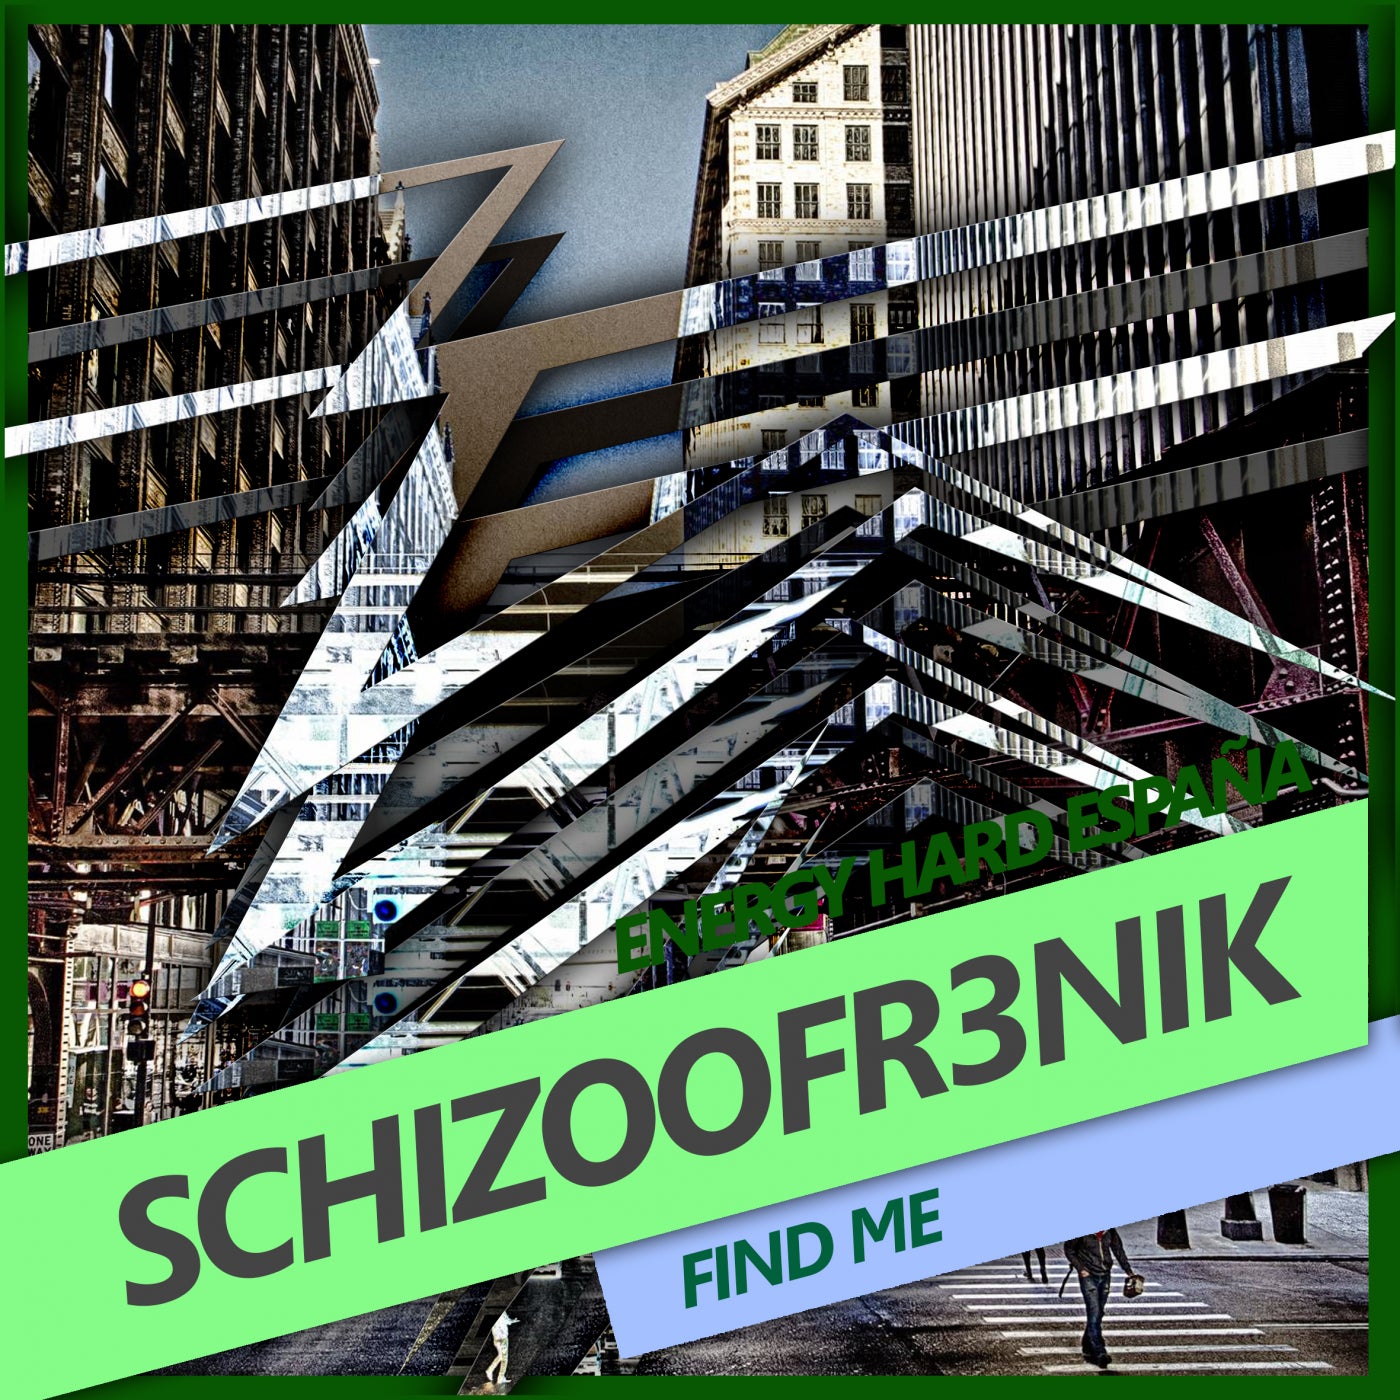 [EHE217] Schizoofr3nik - Find Me 317ececf-9ca6-4e03-ab51-04889875fbe7